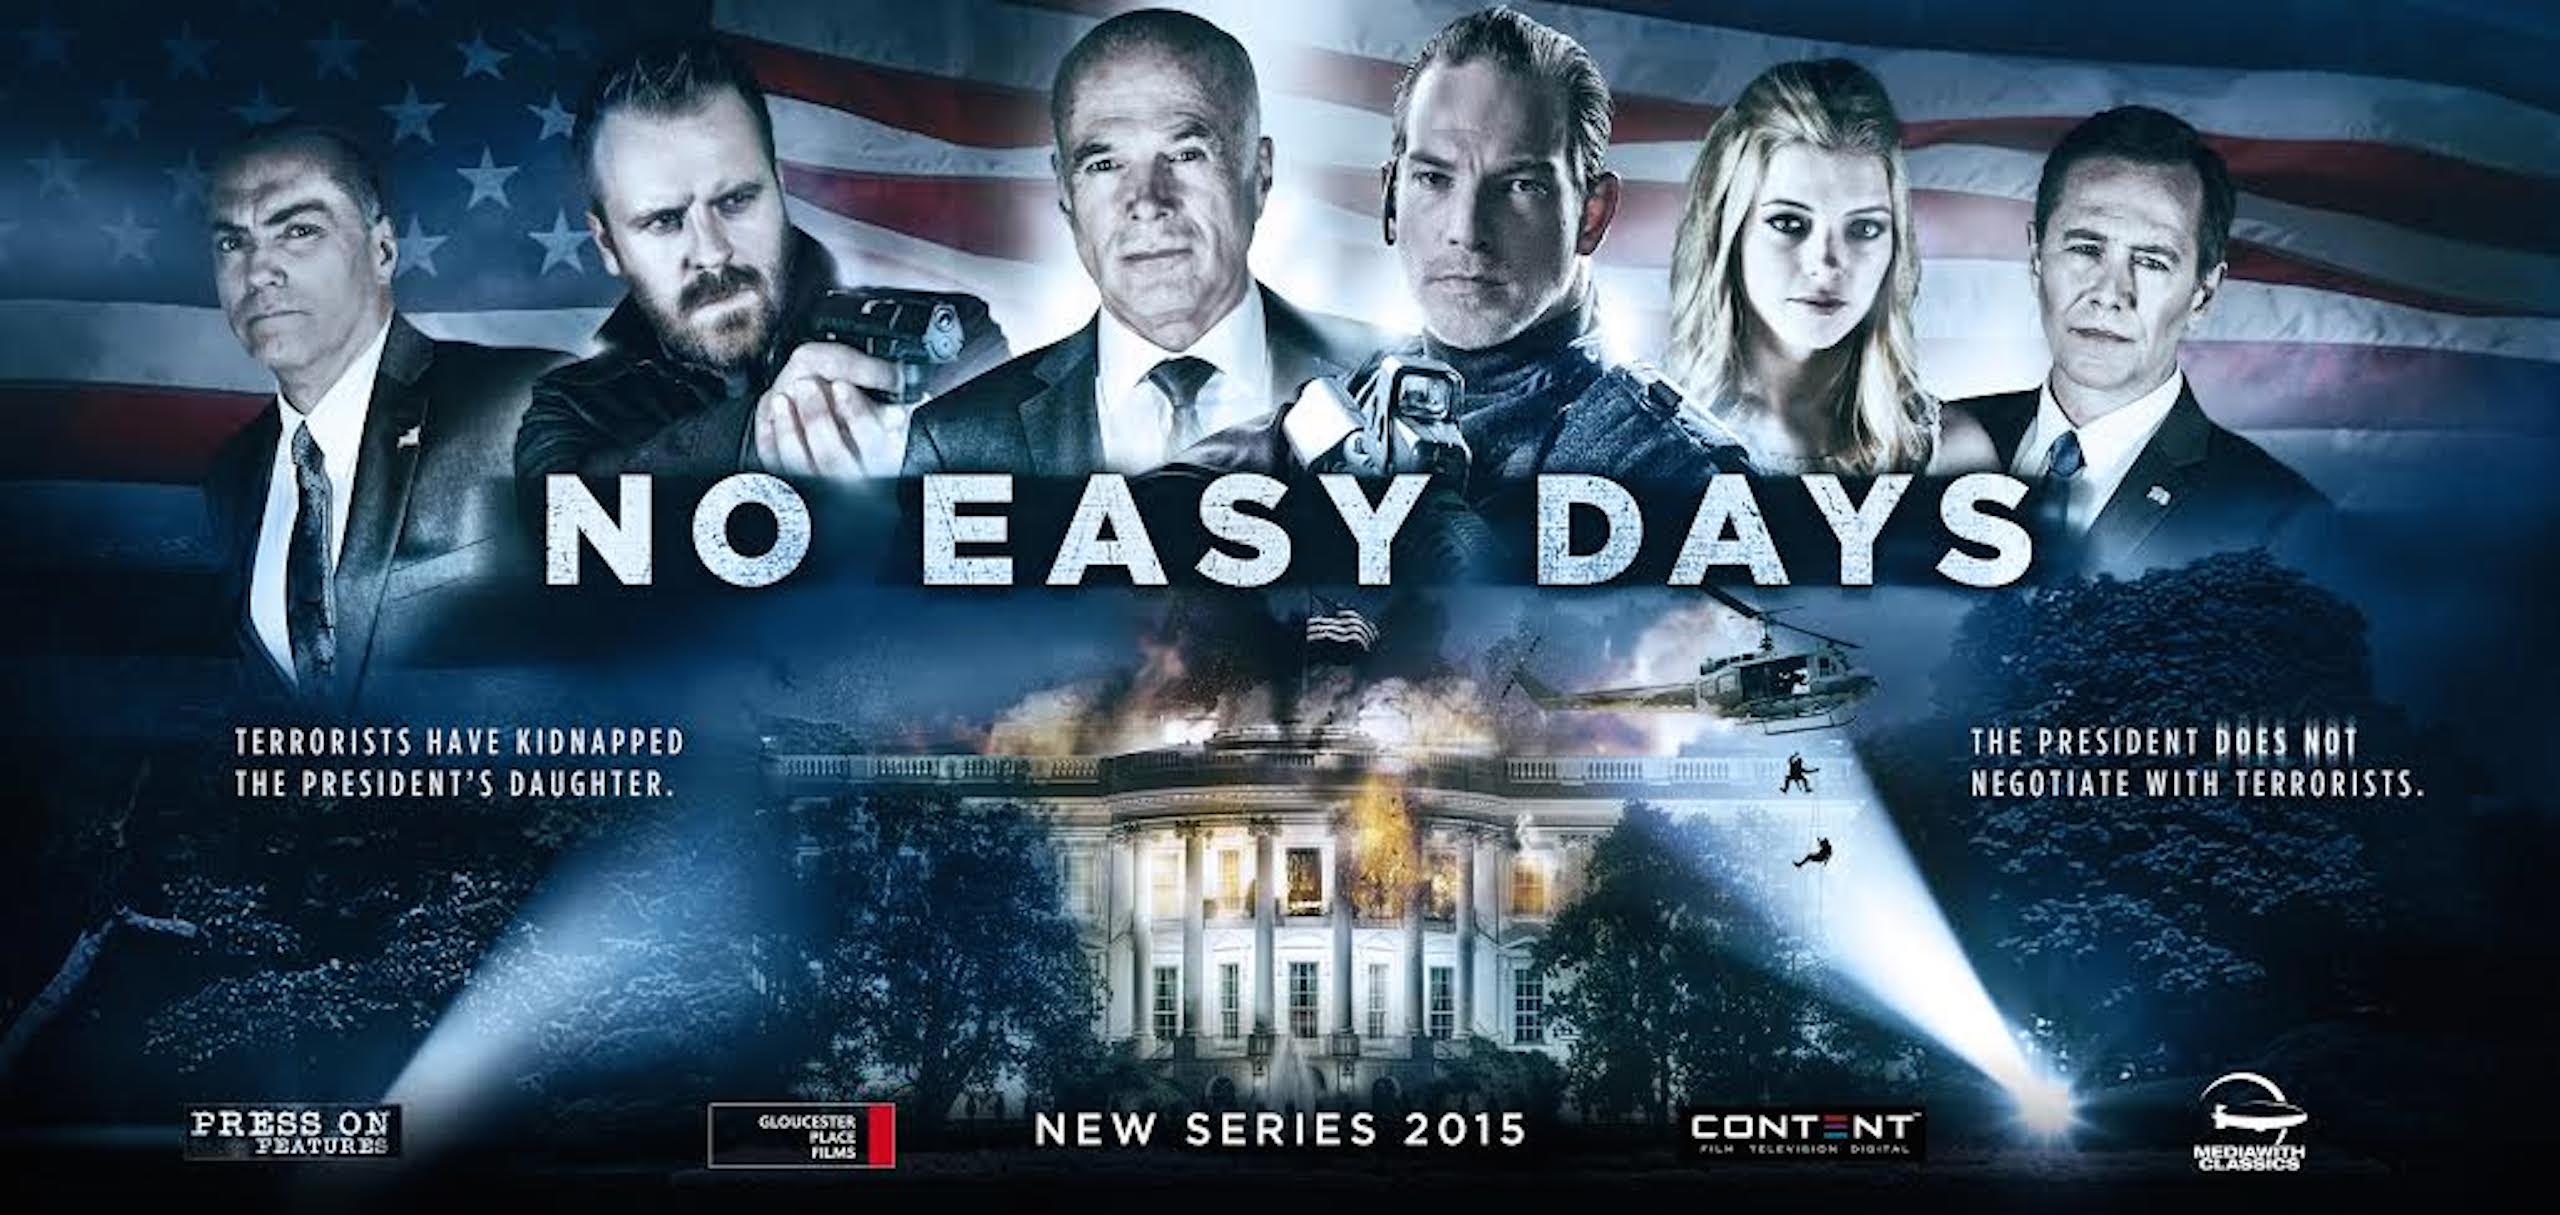 Al Sapienza, Sean Brosnan, Michael Hogan, Peter Outerbridge, Simon Phillips and Eva Link in No Easy Days (2015)